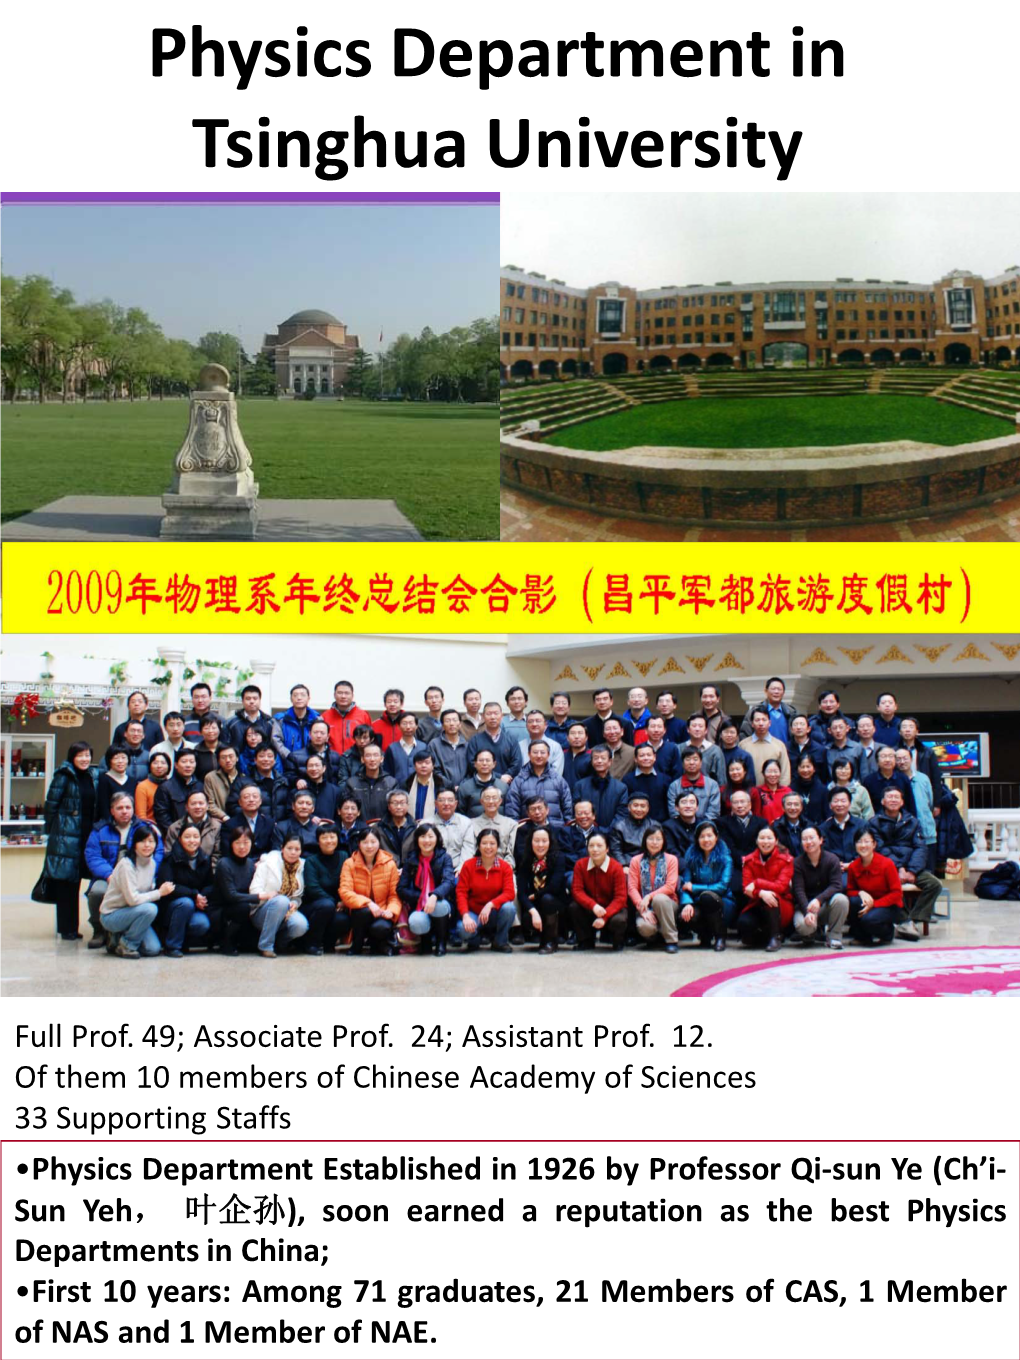 Physics in Tsinghua University